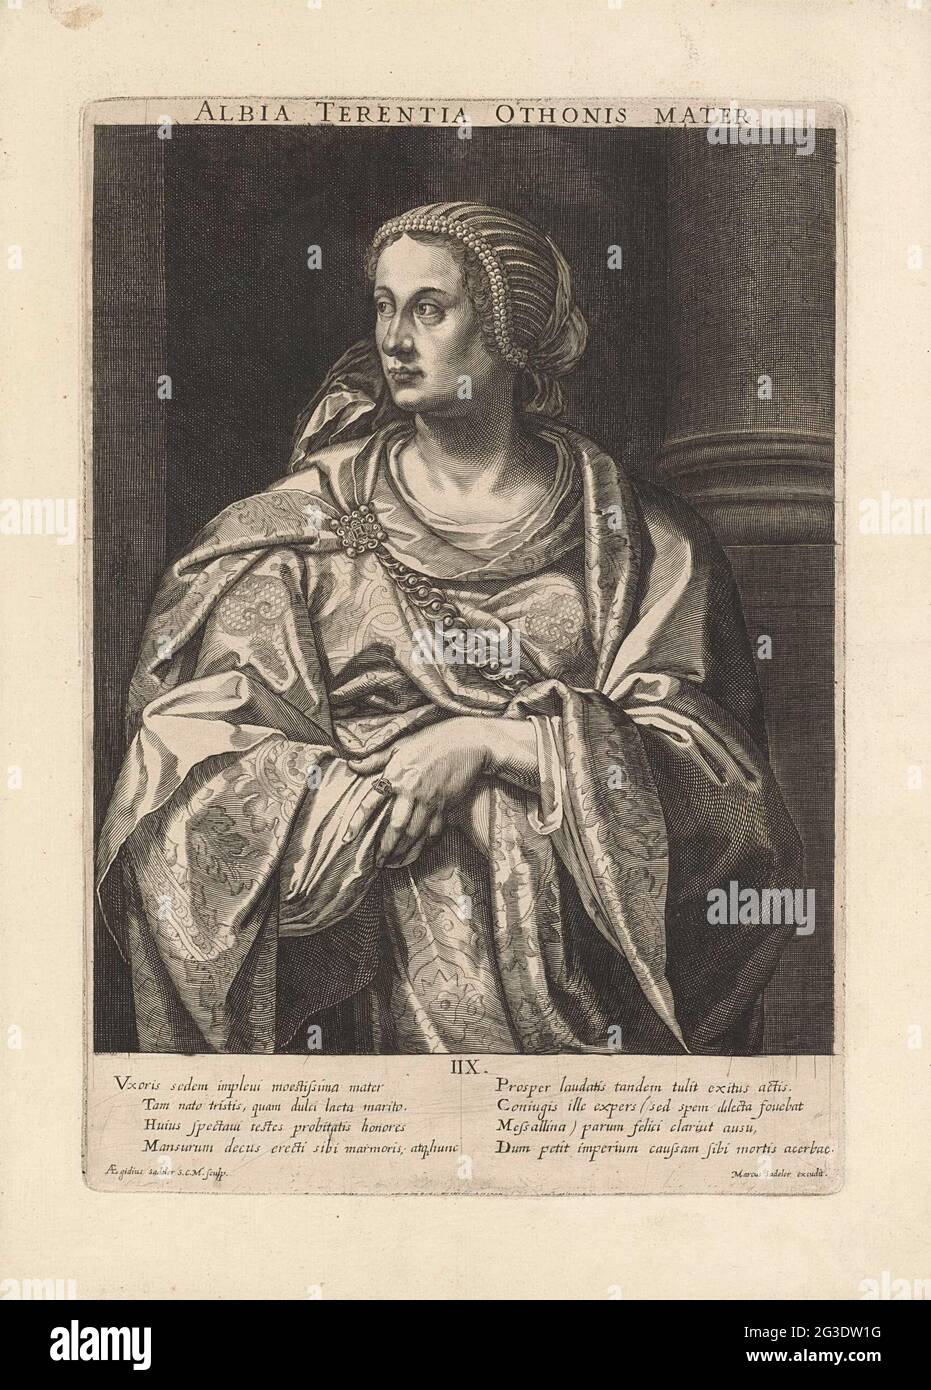 Retrato de Terentia Albia; mujeres romanas famosas. Terentia Albia, madre del emperador Othho. Foto de stock